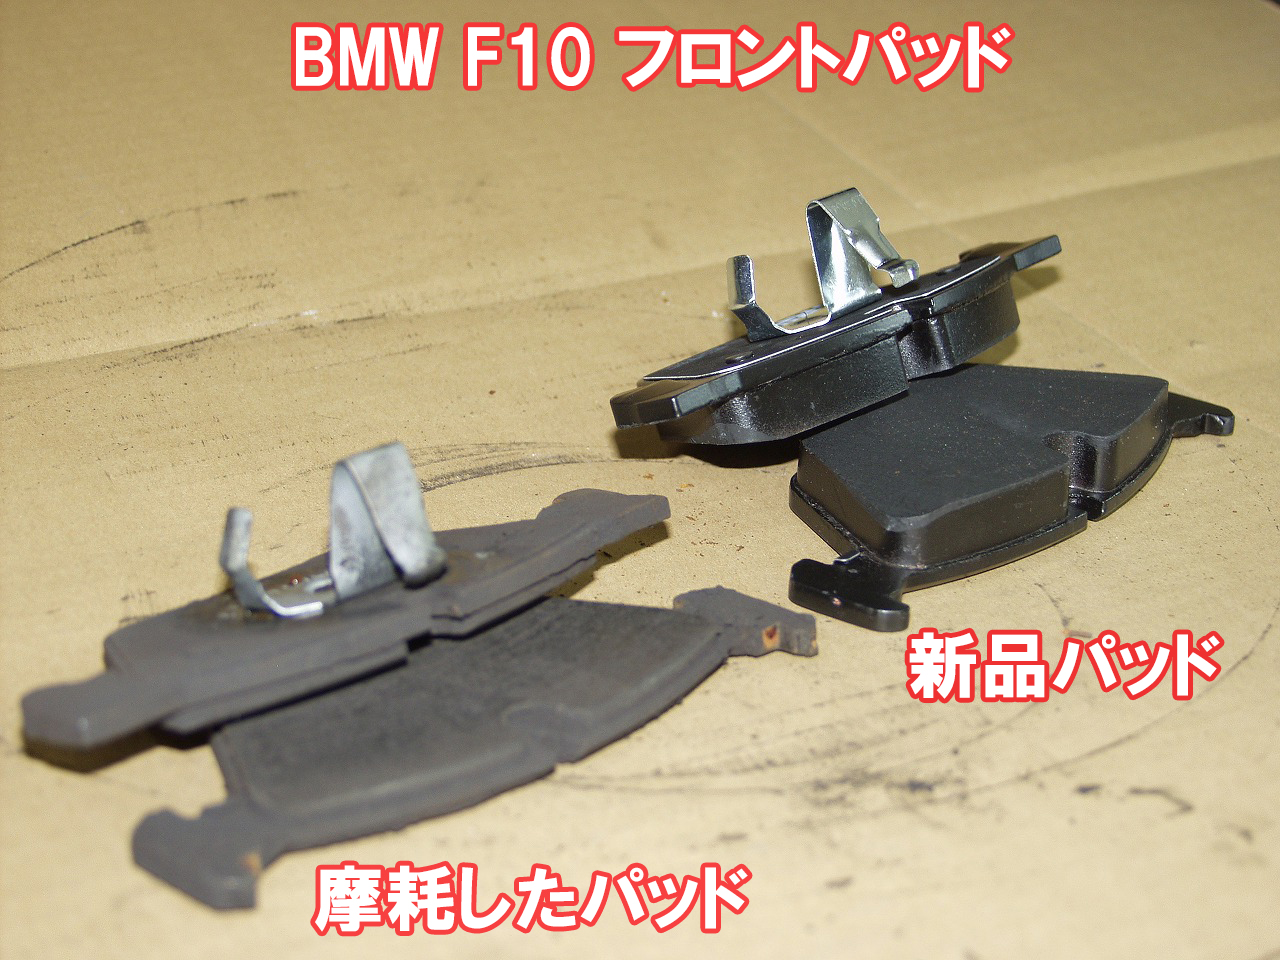 BMW F10 528i 摩耗したパッドと新品パッドの比較